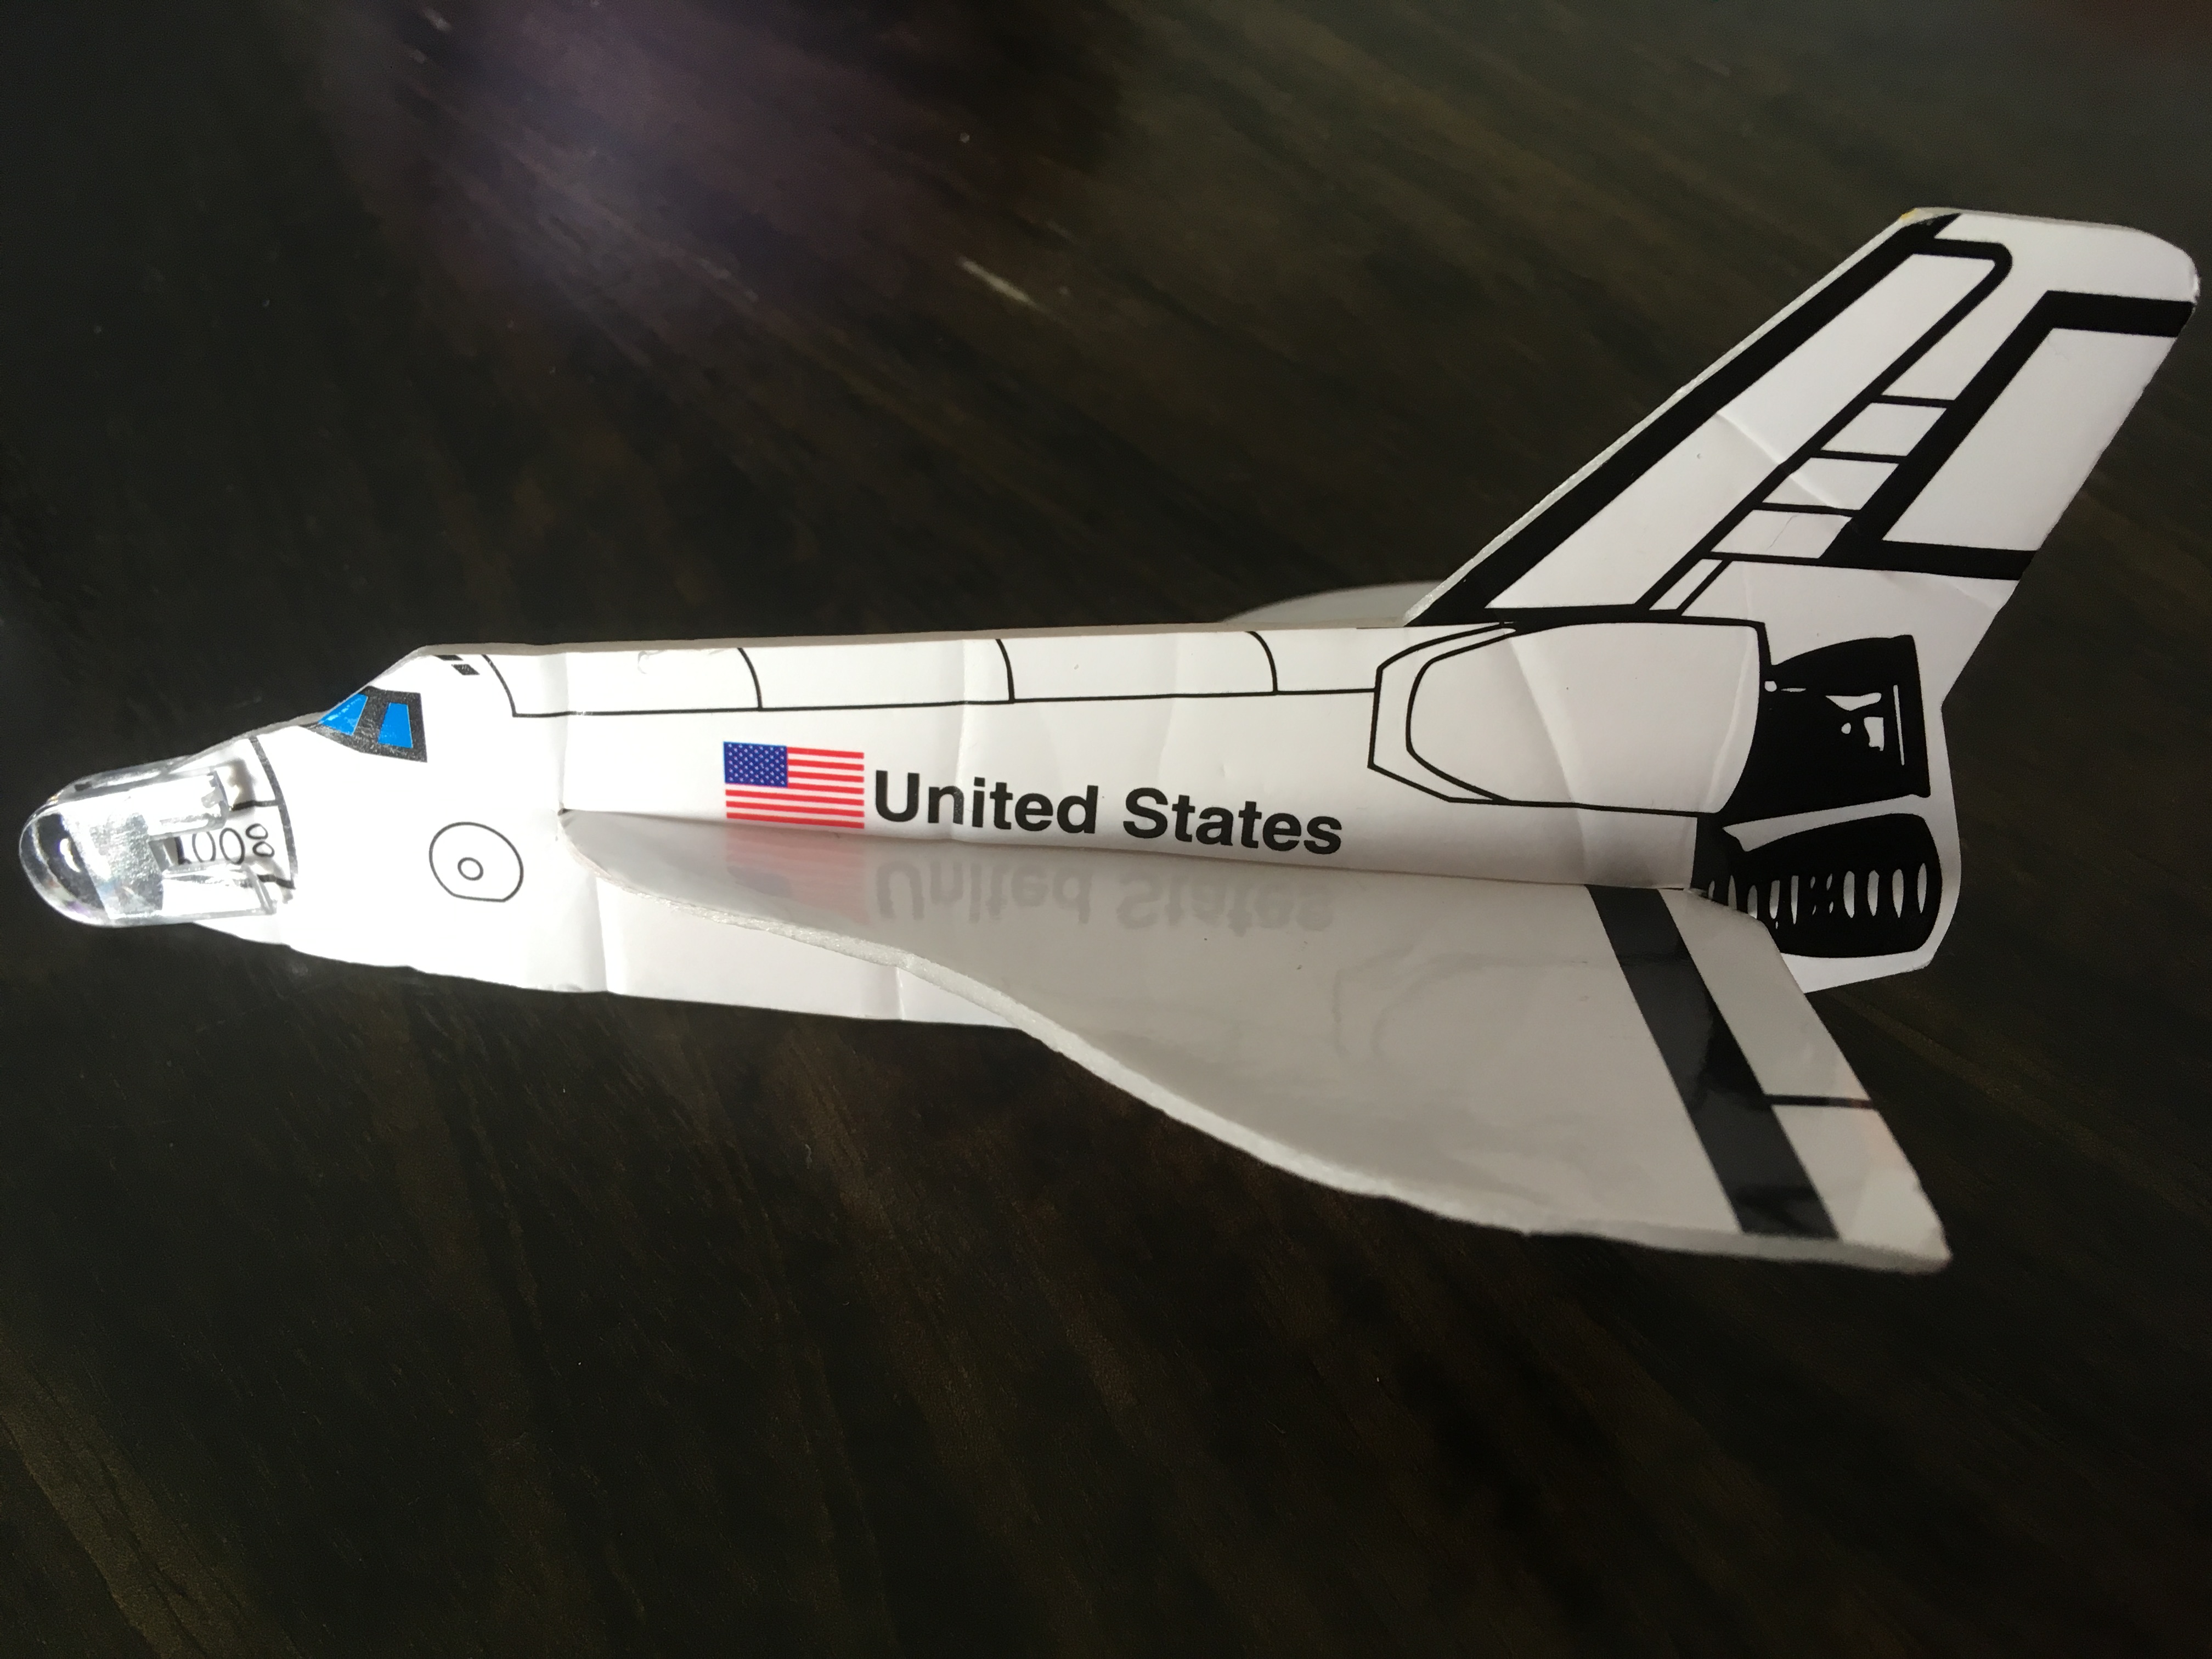 Space shuttle glider assembled